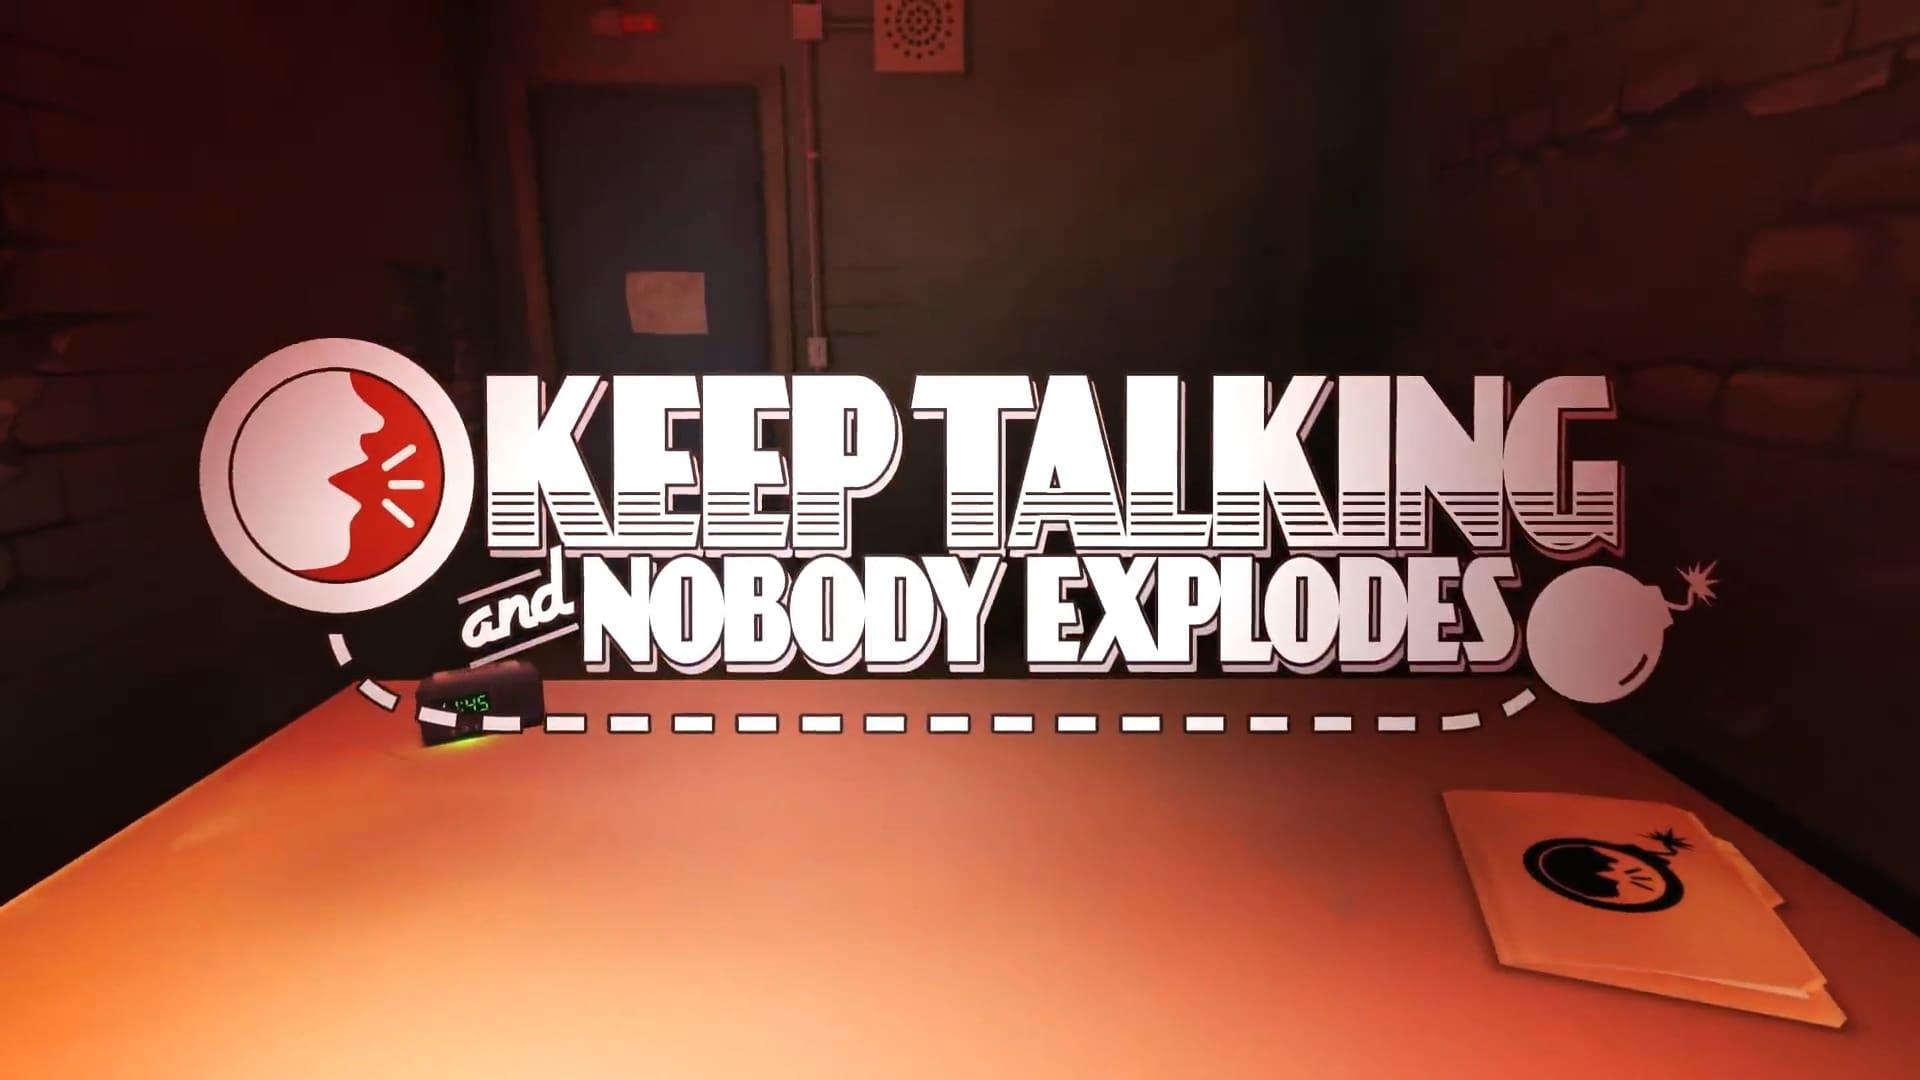 keep talking and nobody explodes